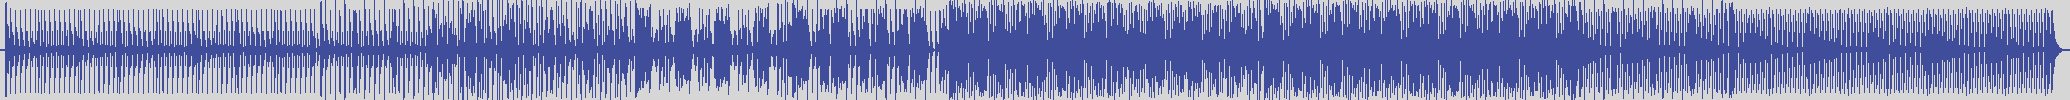 atomic_recordings [AR009] Peebee - Get Down [The Beat Mix] audio wave form